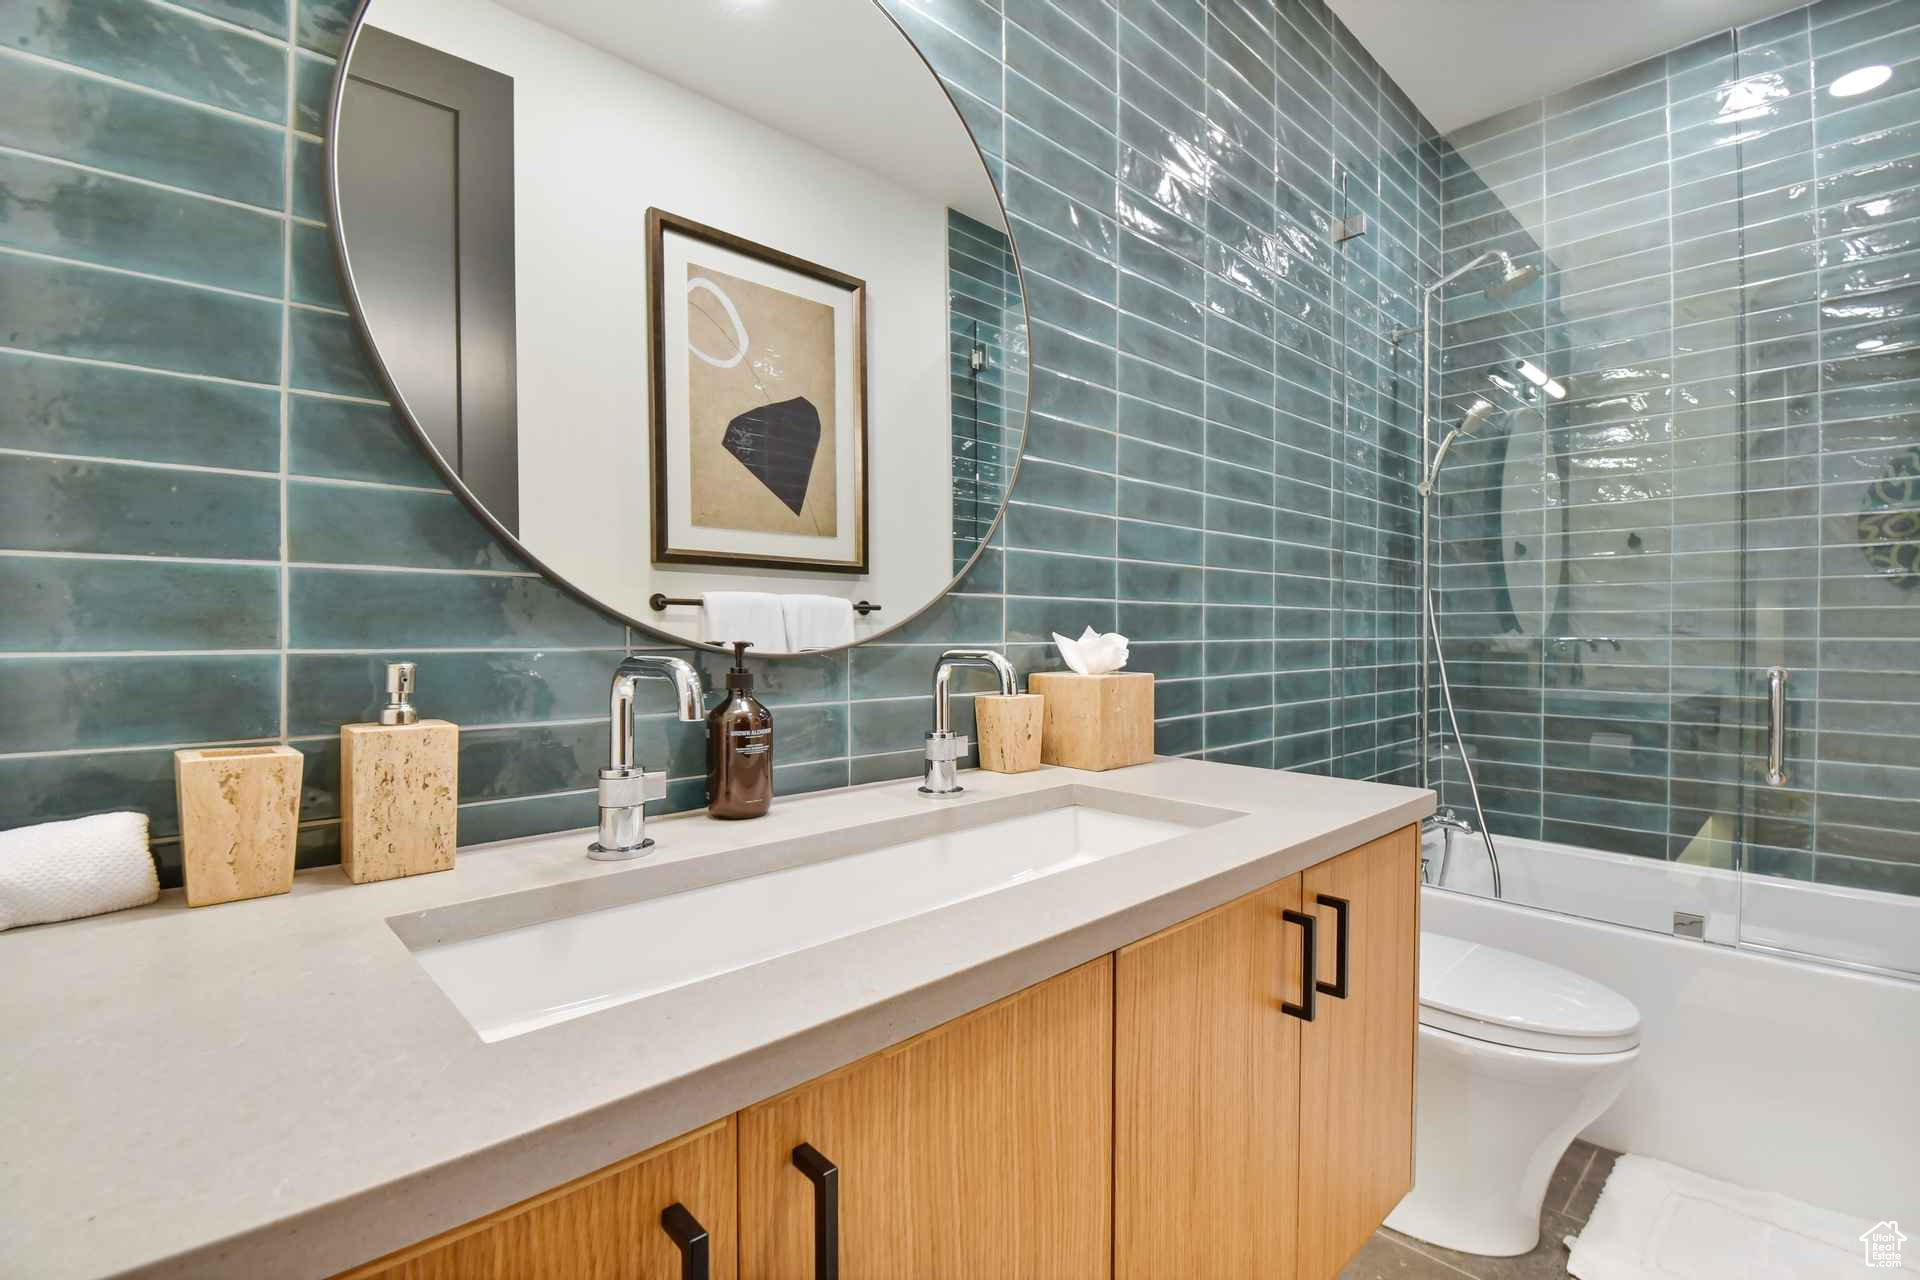 Full bathroom with tile walls, shower / bath combination with glass door, vanity, and toilet